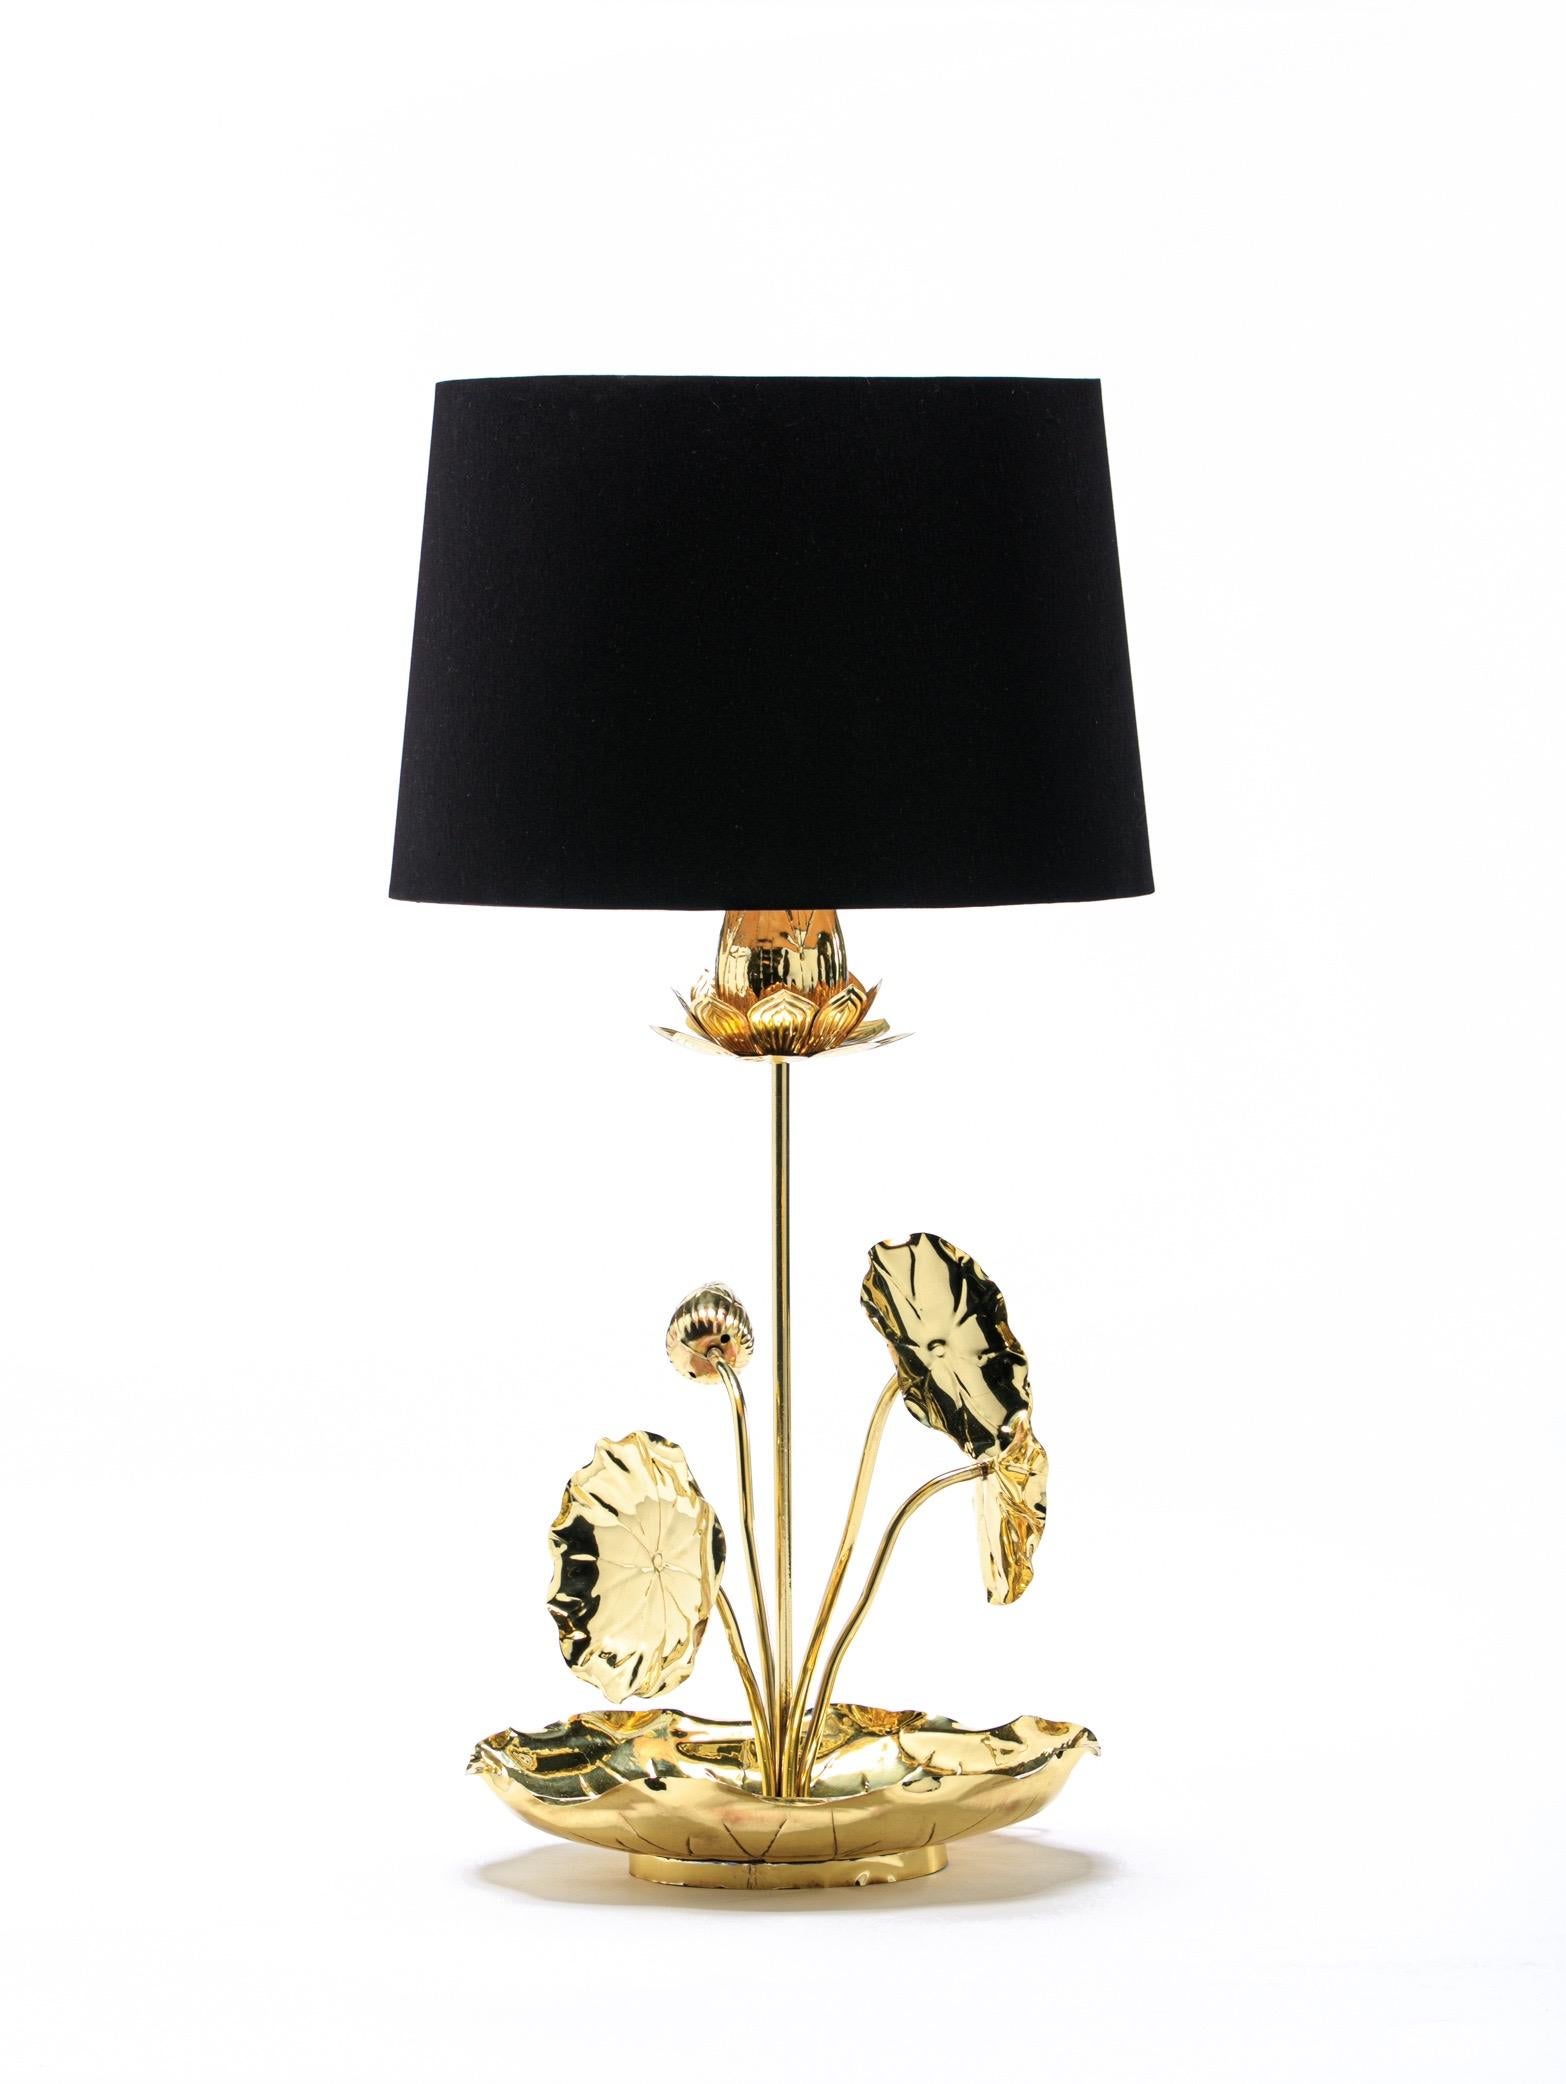 Hollywood Regency Lotus Flower Lamp in Polished Brass by Feldman c. 1960 For Sale 2